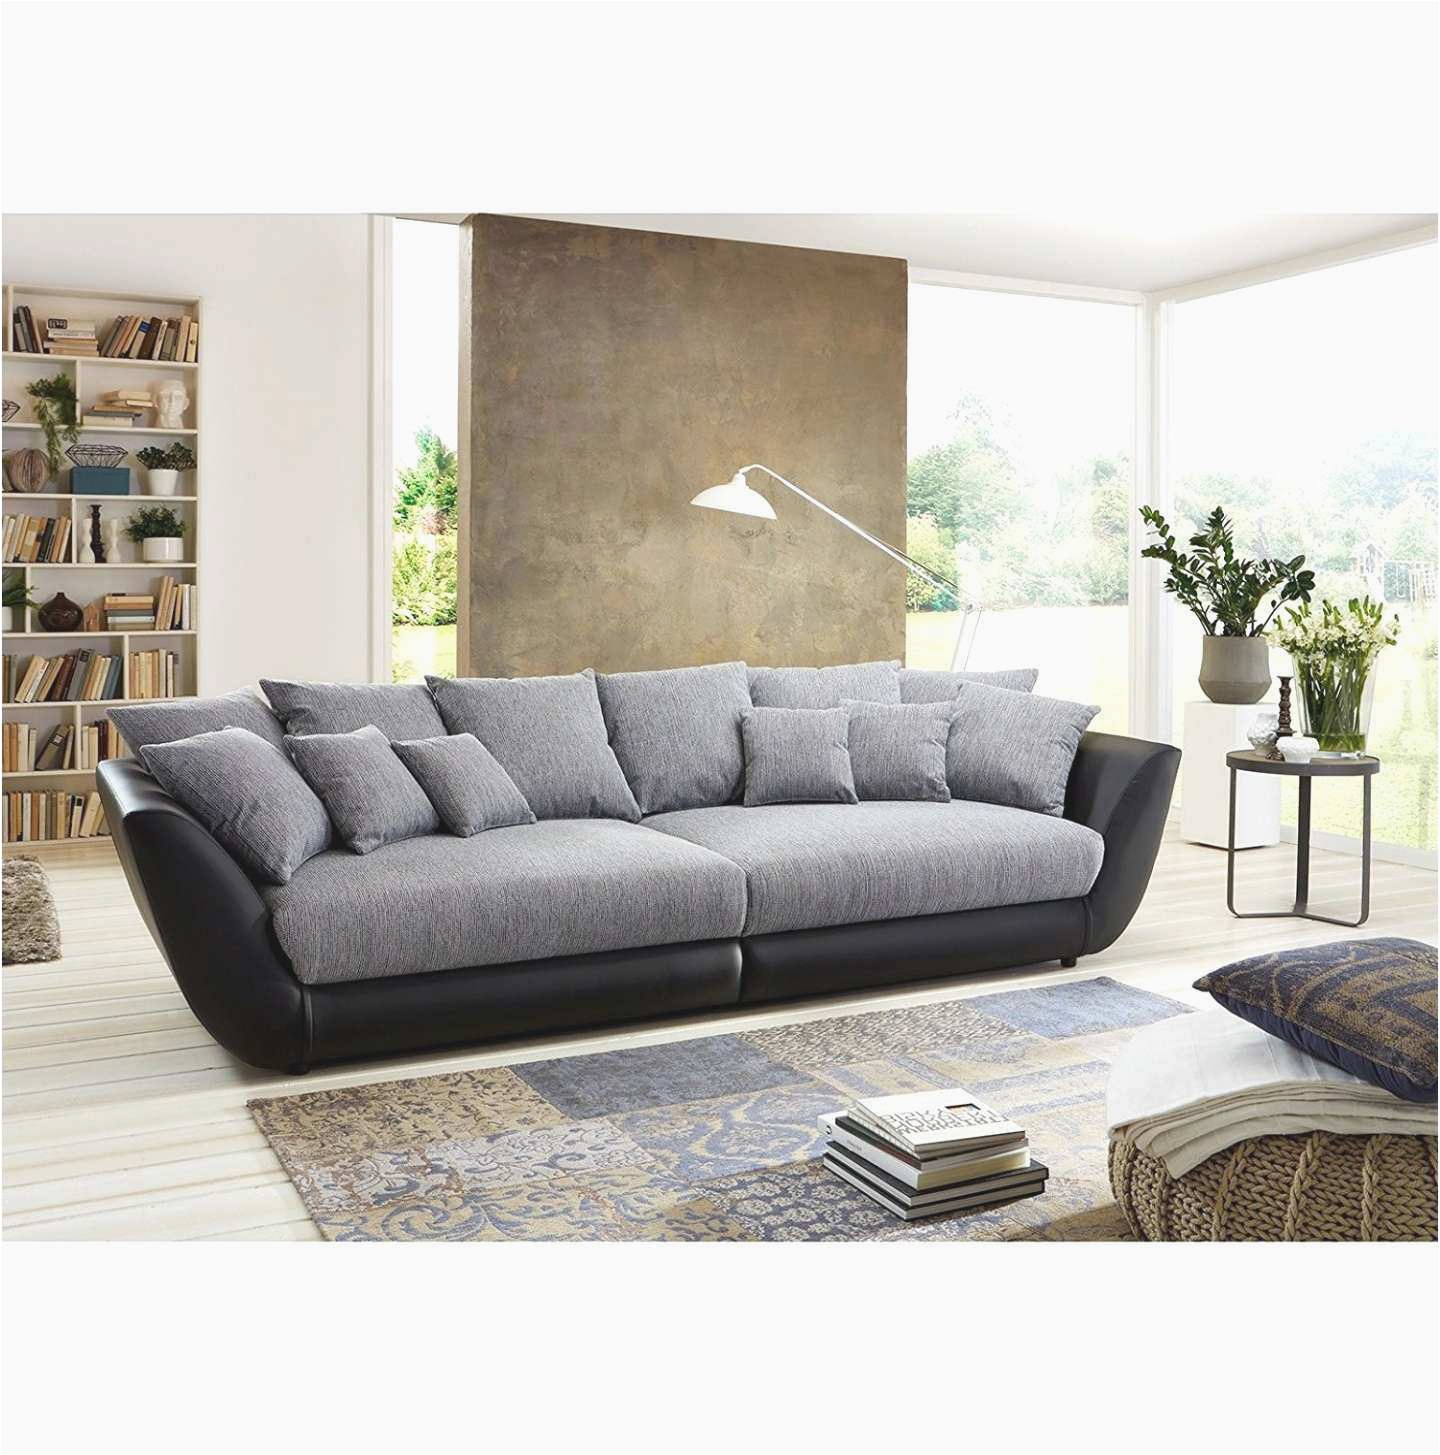 Furniture sofa Design sofa L form Frisch U sofa Xxl Schön Big sofa L form Luxus U